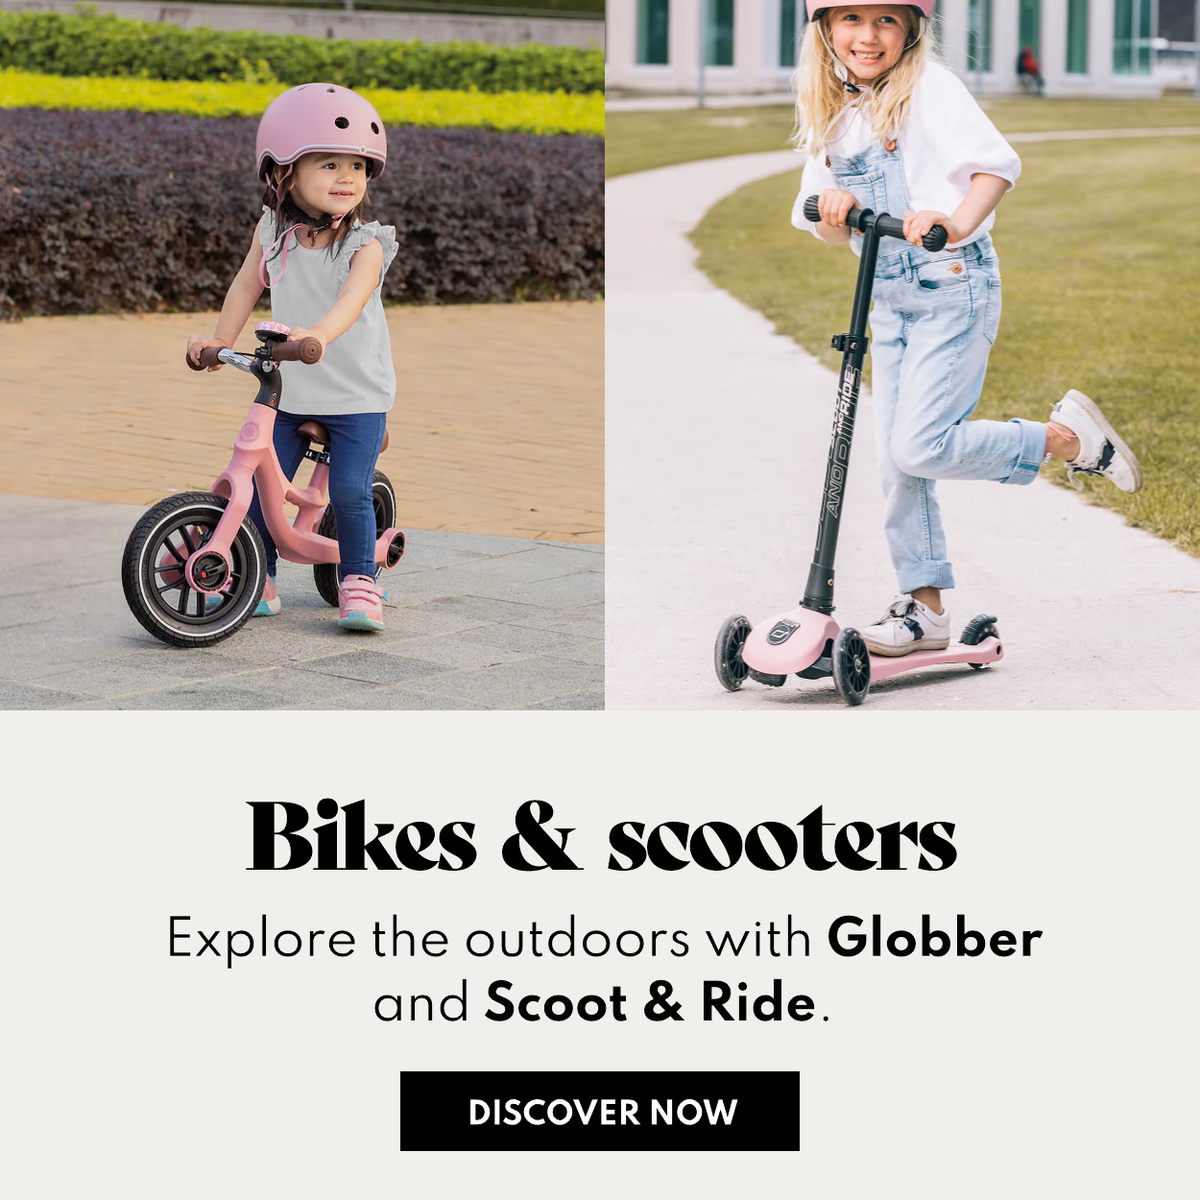 Kids bikes & scooters